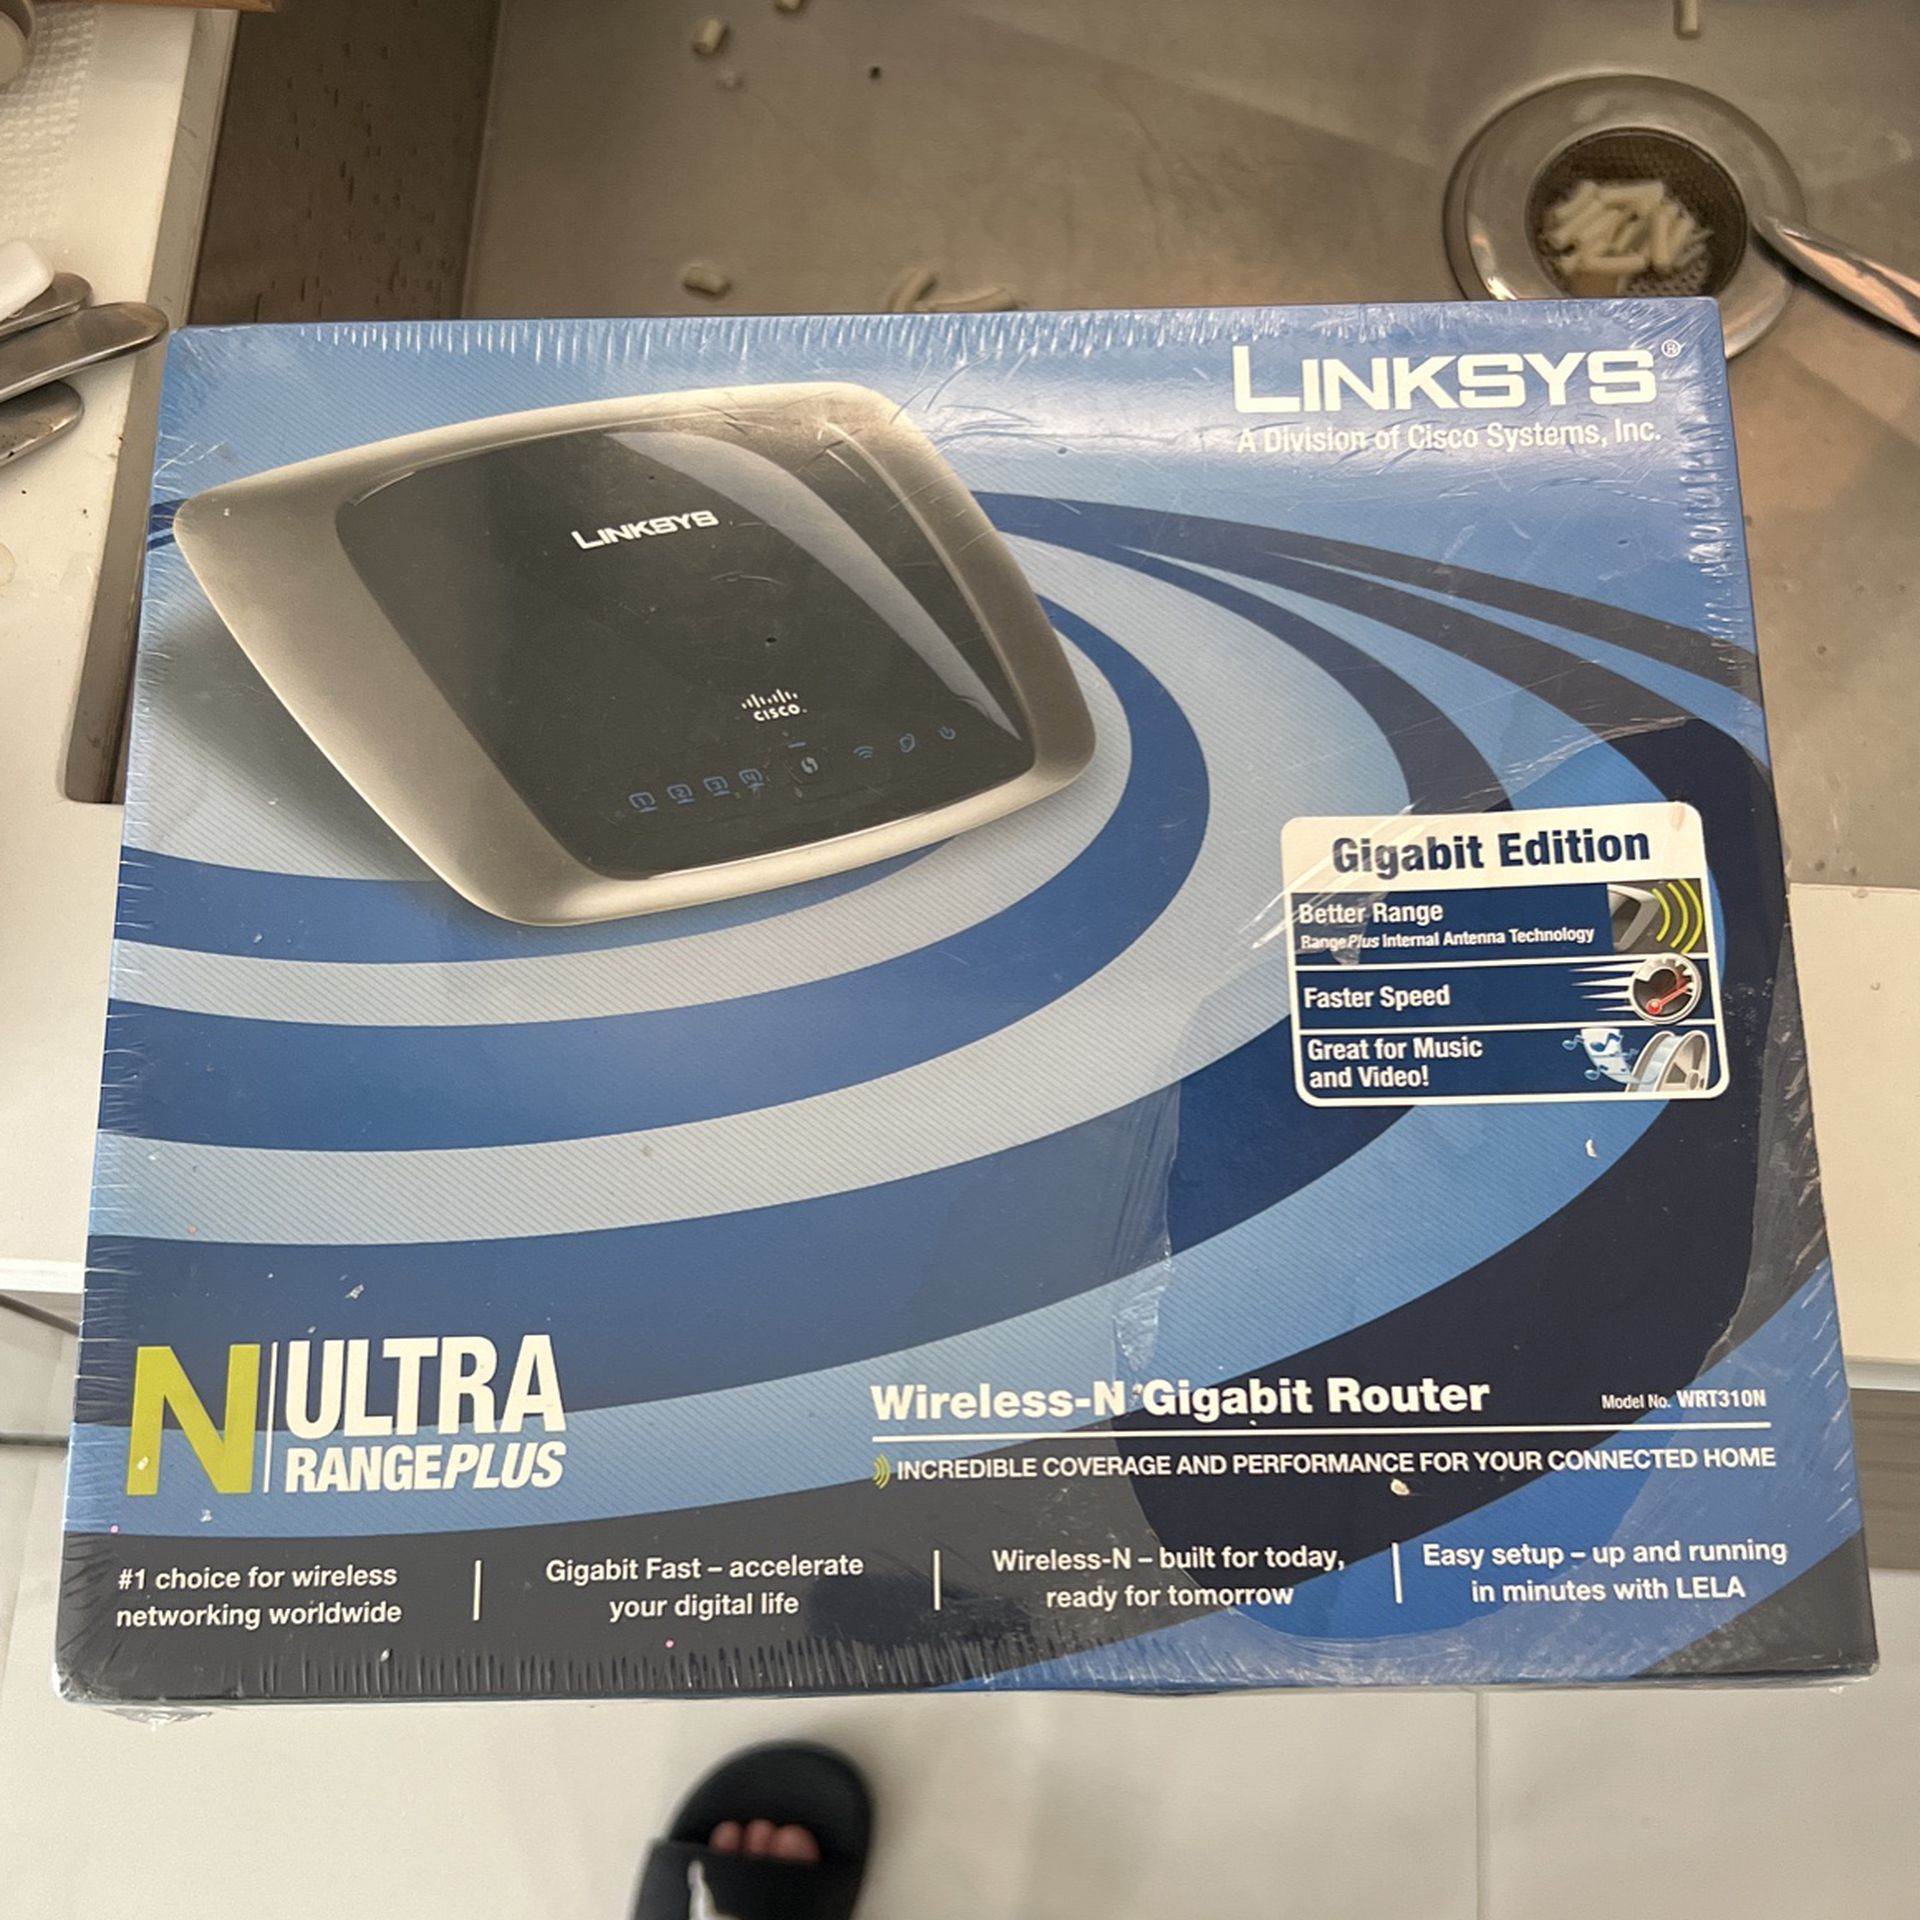 Linksys Wireless Router Gigabit Edition